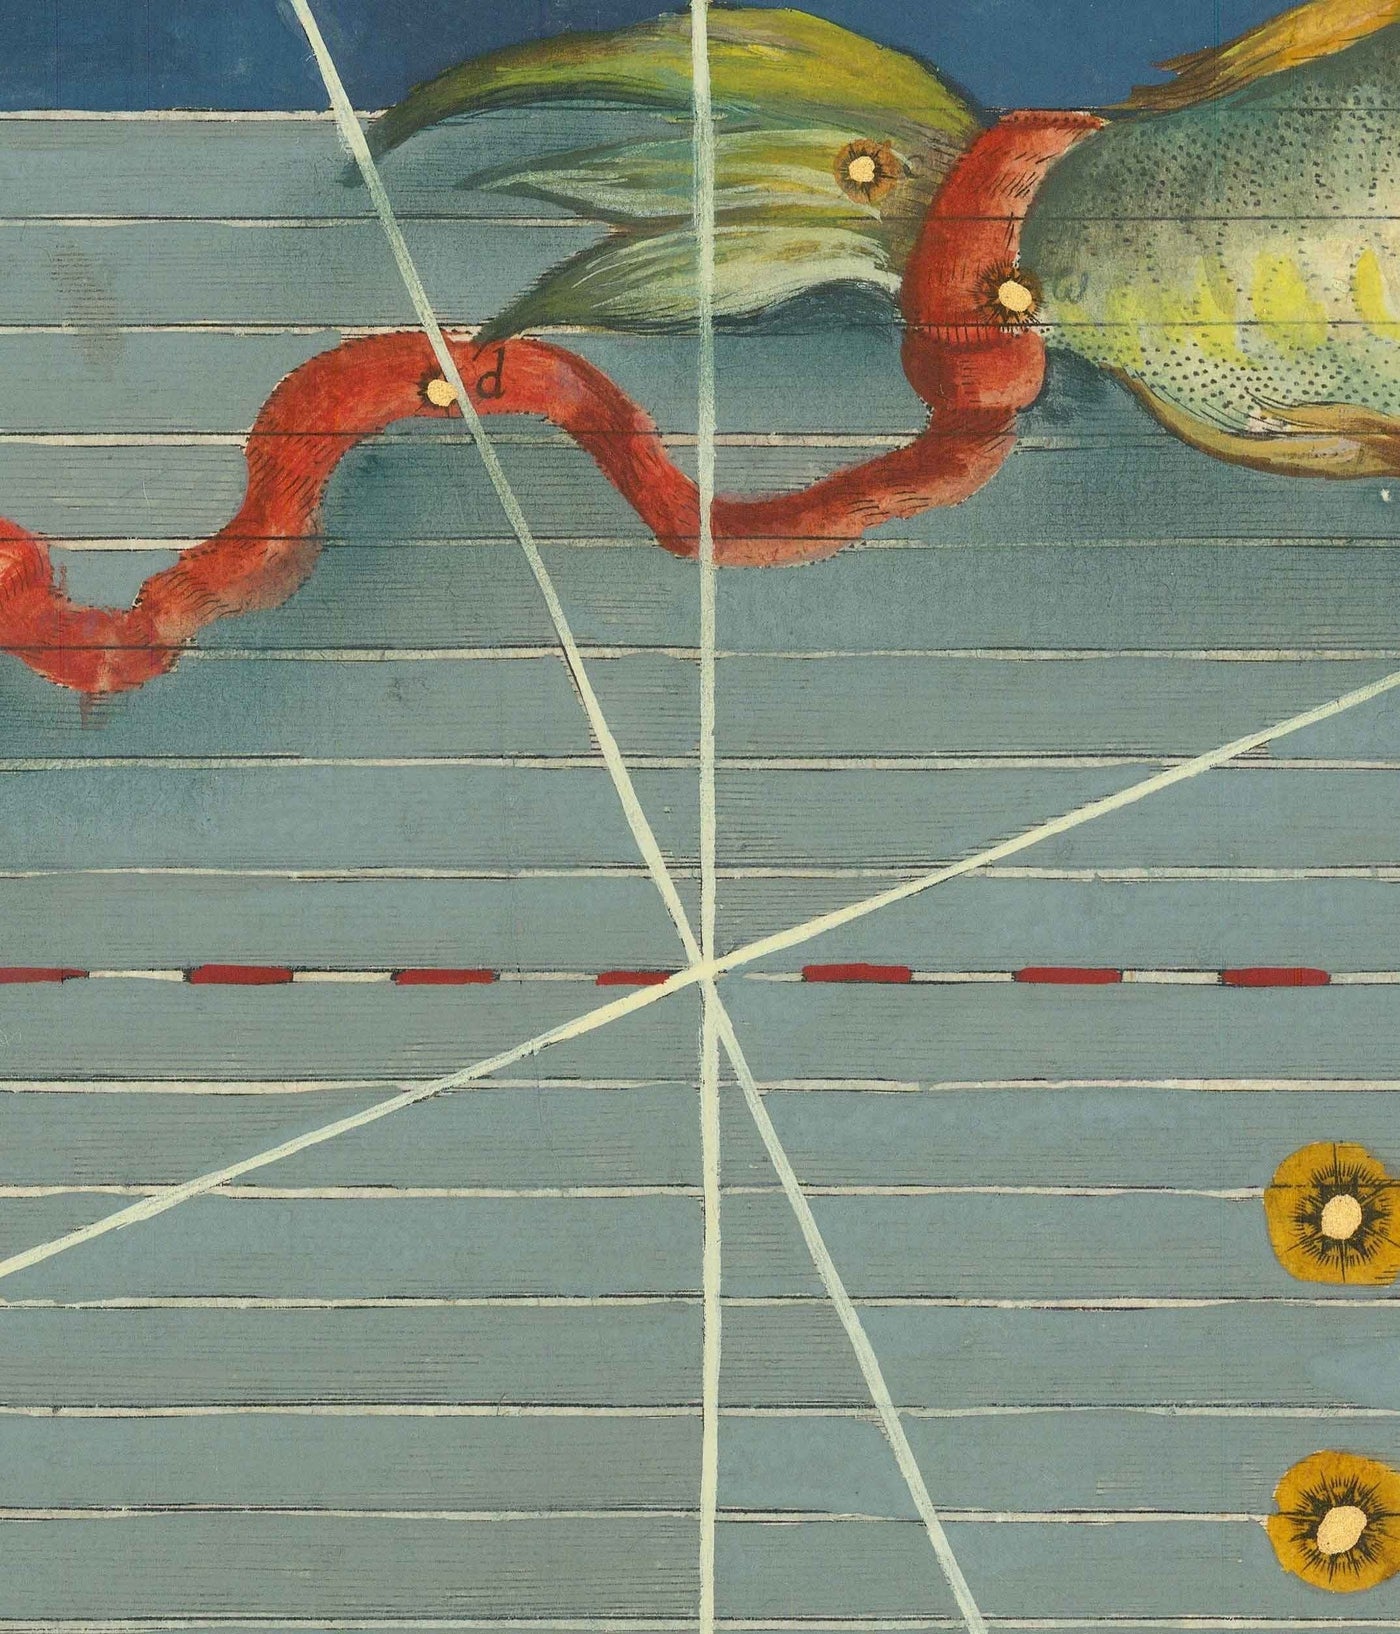 Old Star Map of Poisses, 1603 par Johann Bayer - Zodiac Astrology Chart - The Fish Horoscope Sign